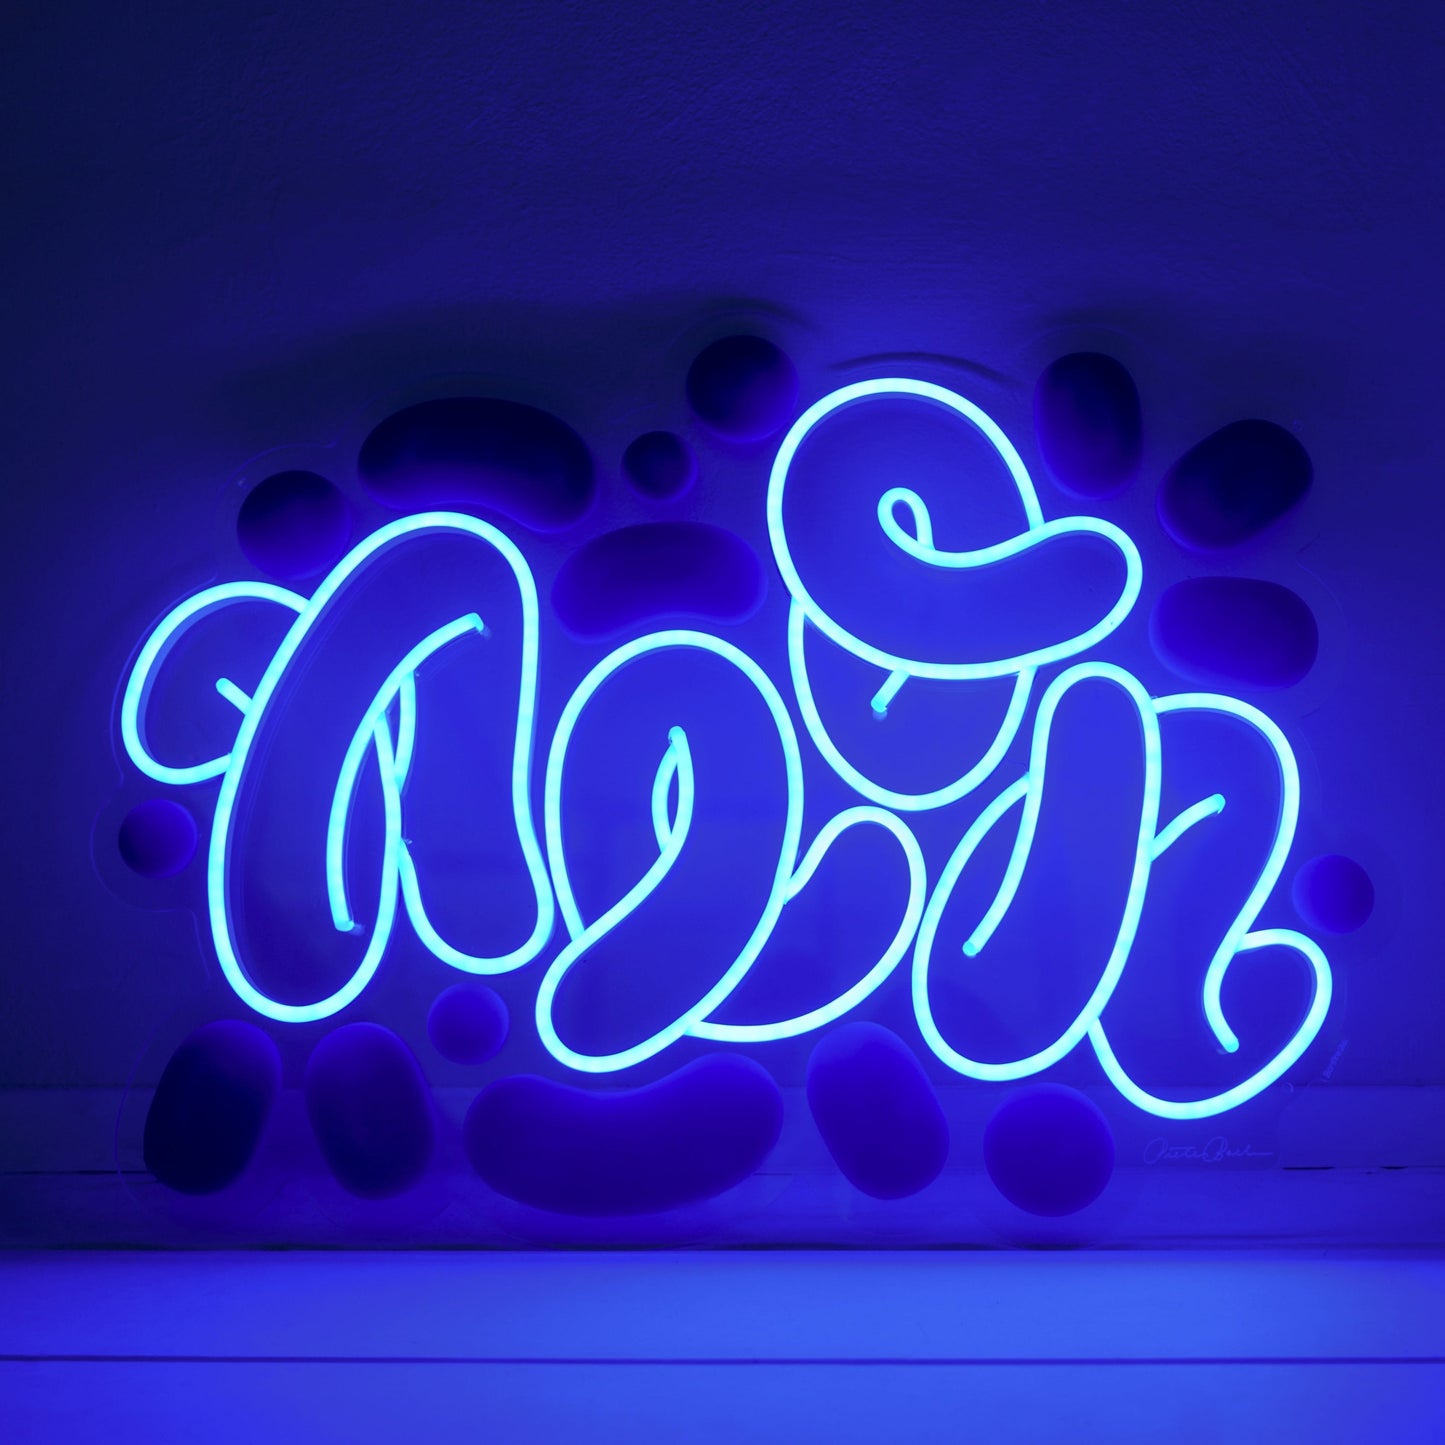 Neon Typography by Pieter Boels